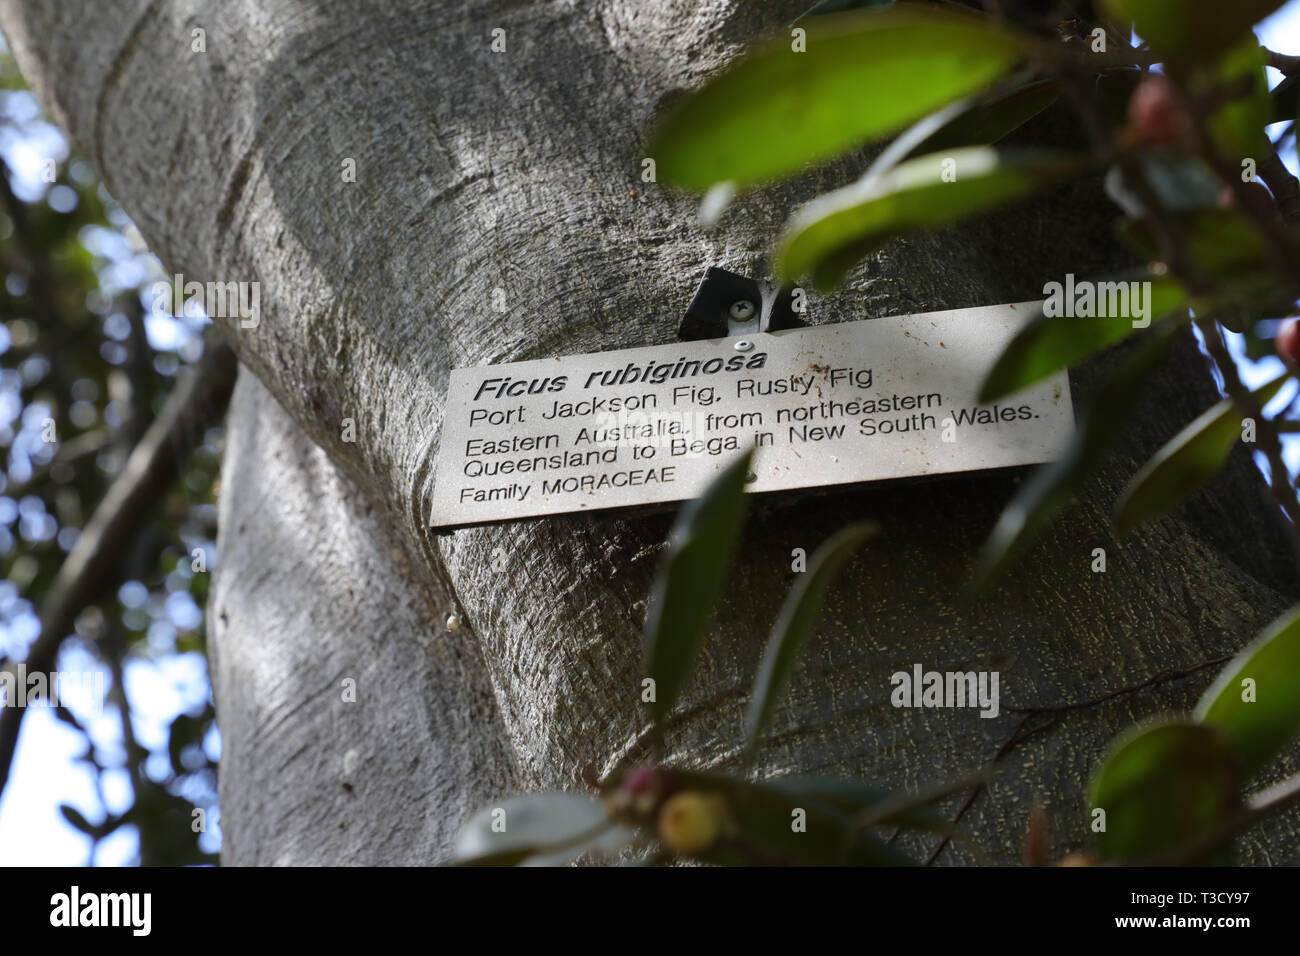 Port Jackson Bild, Rusty Feigenbaum (Ficus Rubiginosa) im Royal Botanic Garden, Sydney. Stockfoto